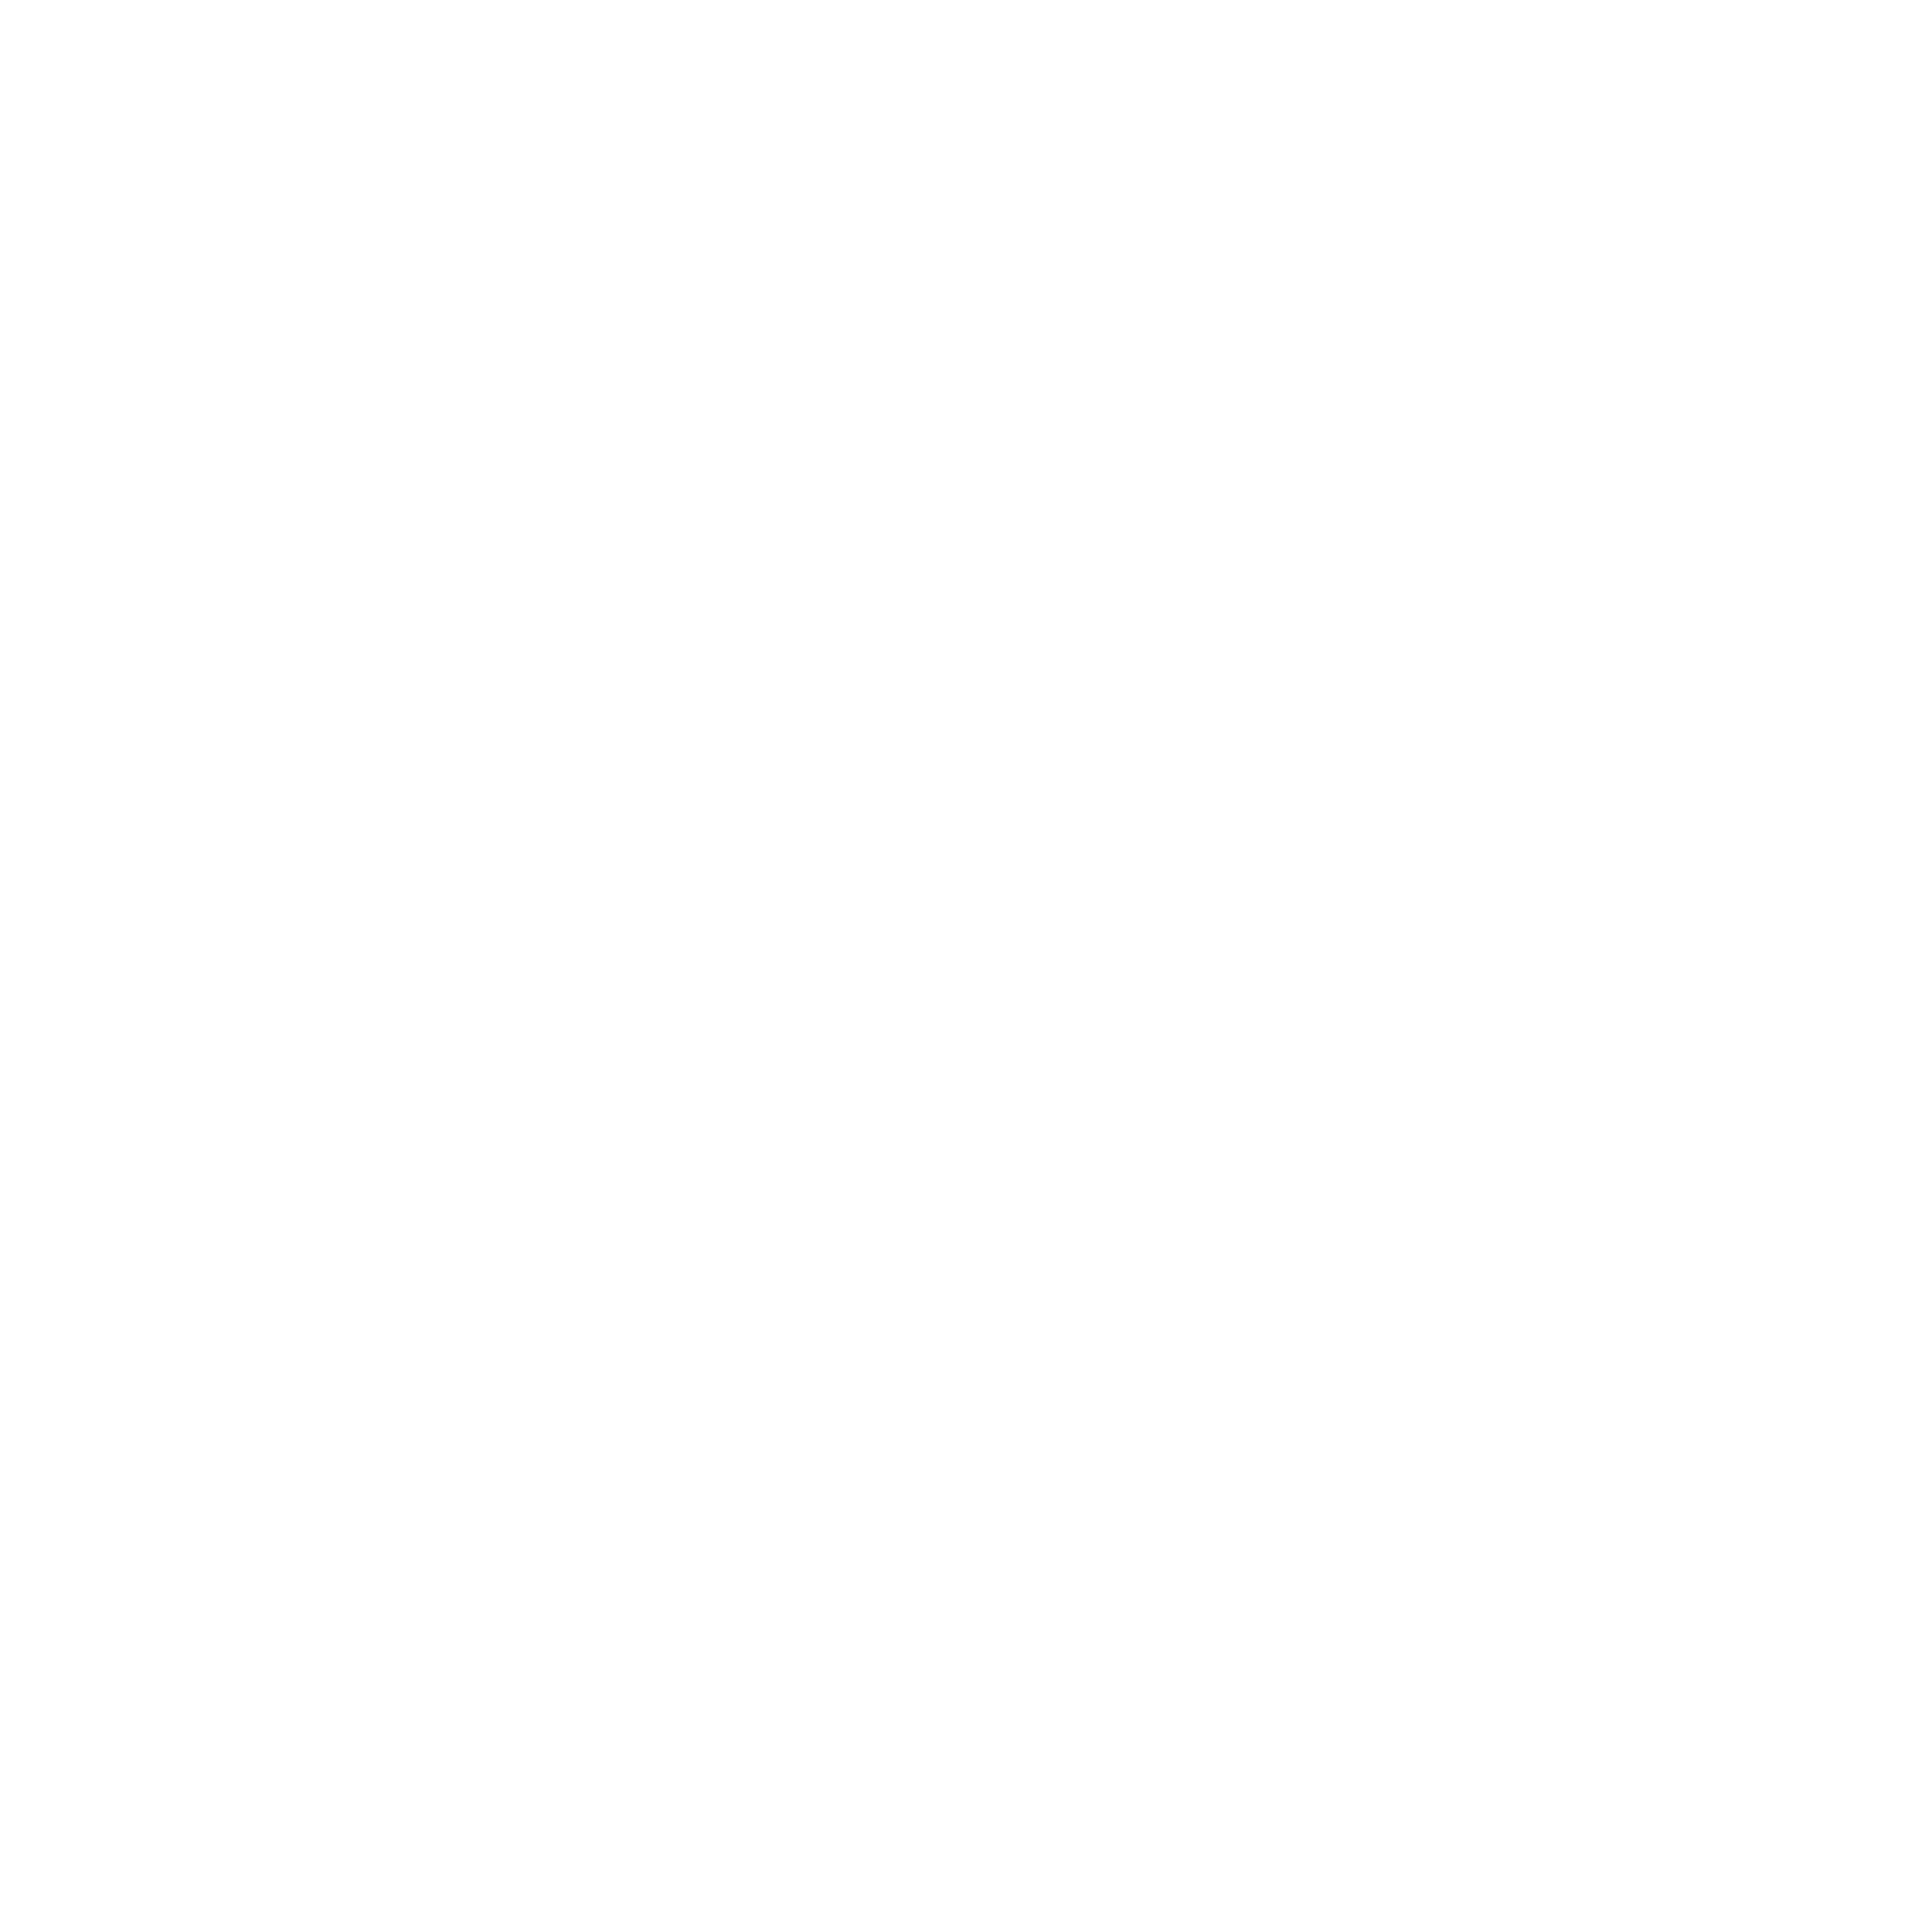 Merrell Logo - Merrell 45 Logo PNG Transparent & SVG Vector - Freebie Supply